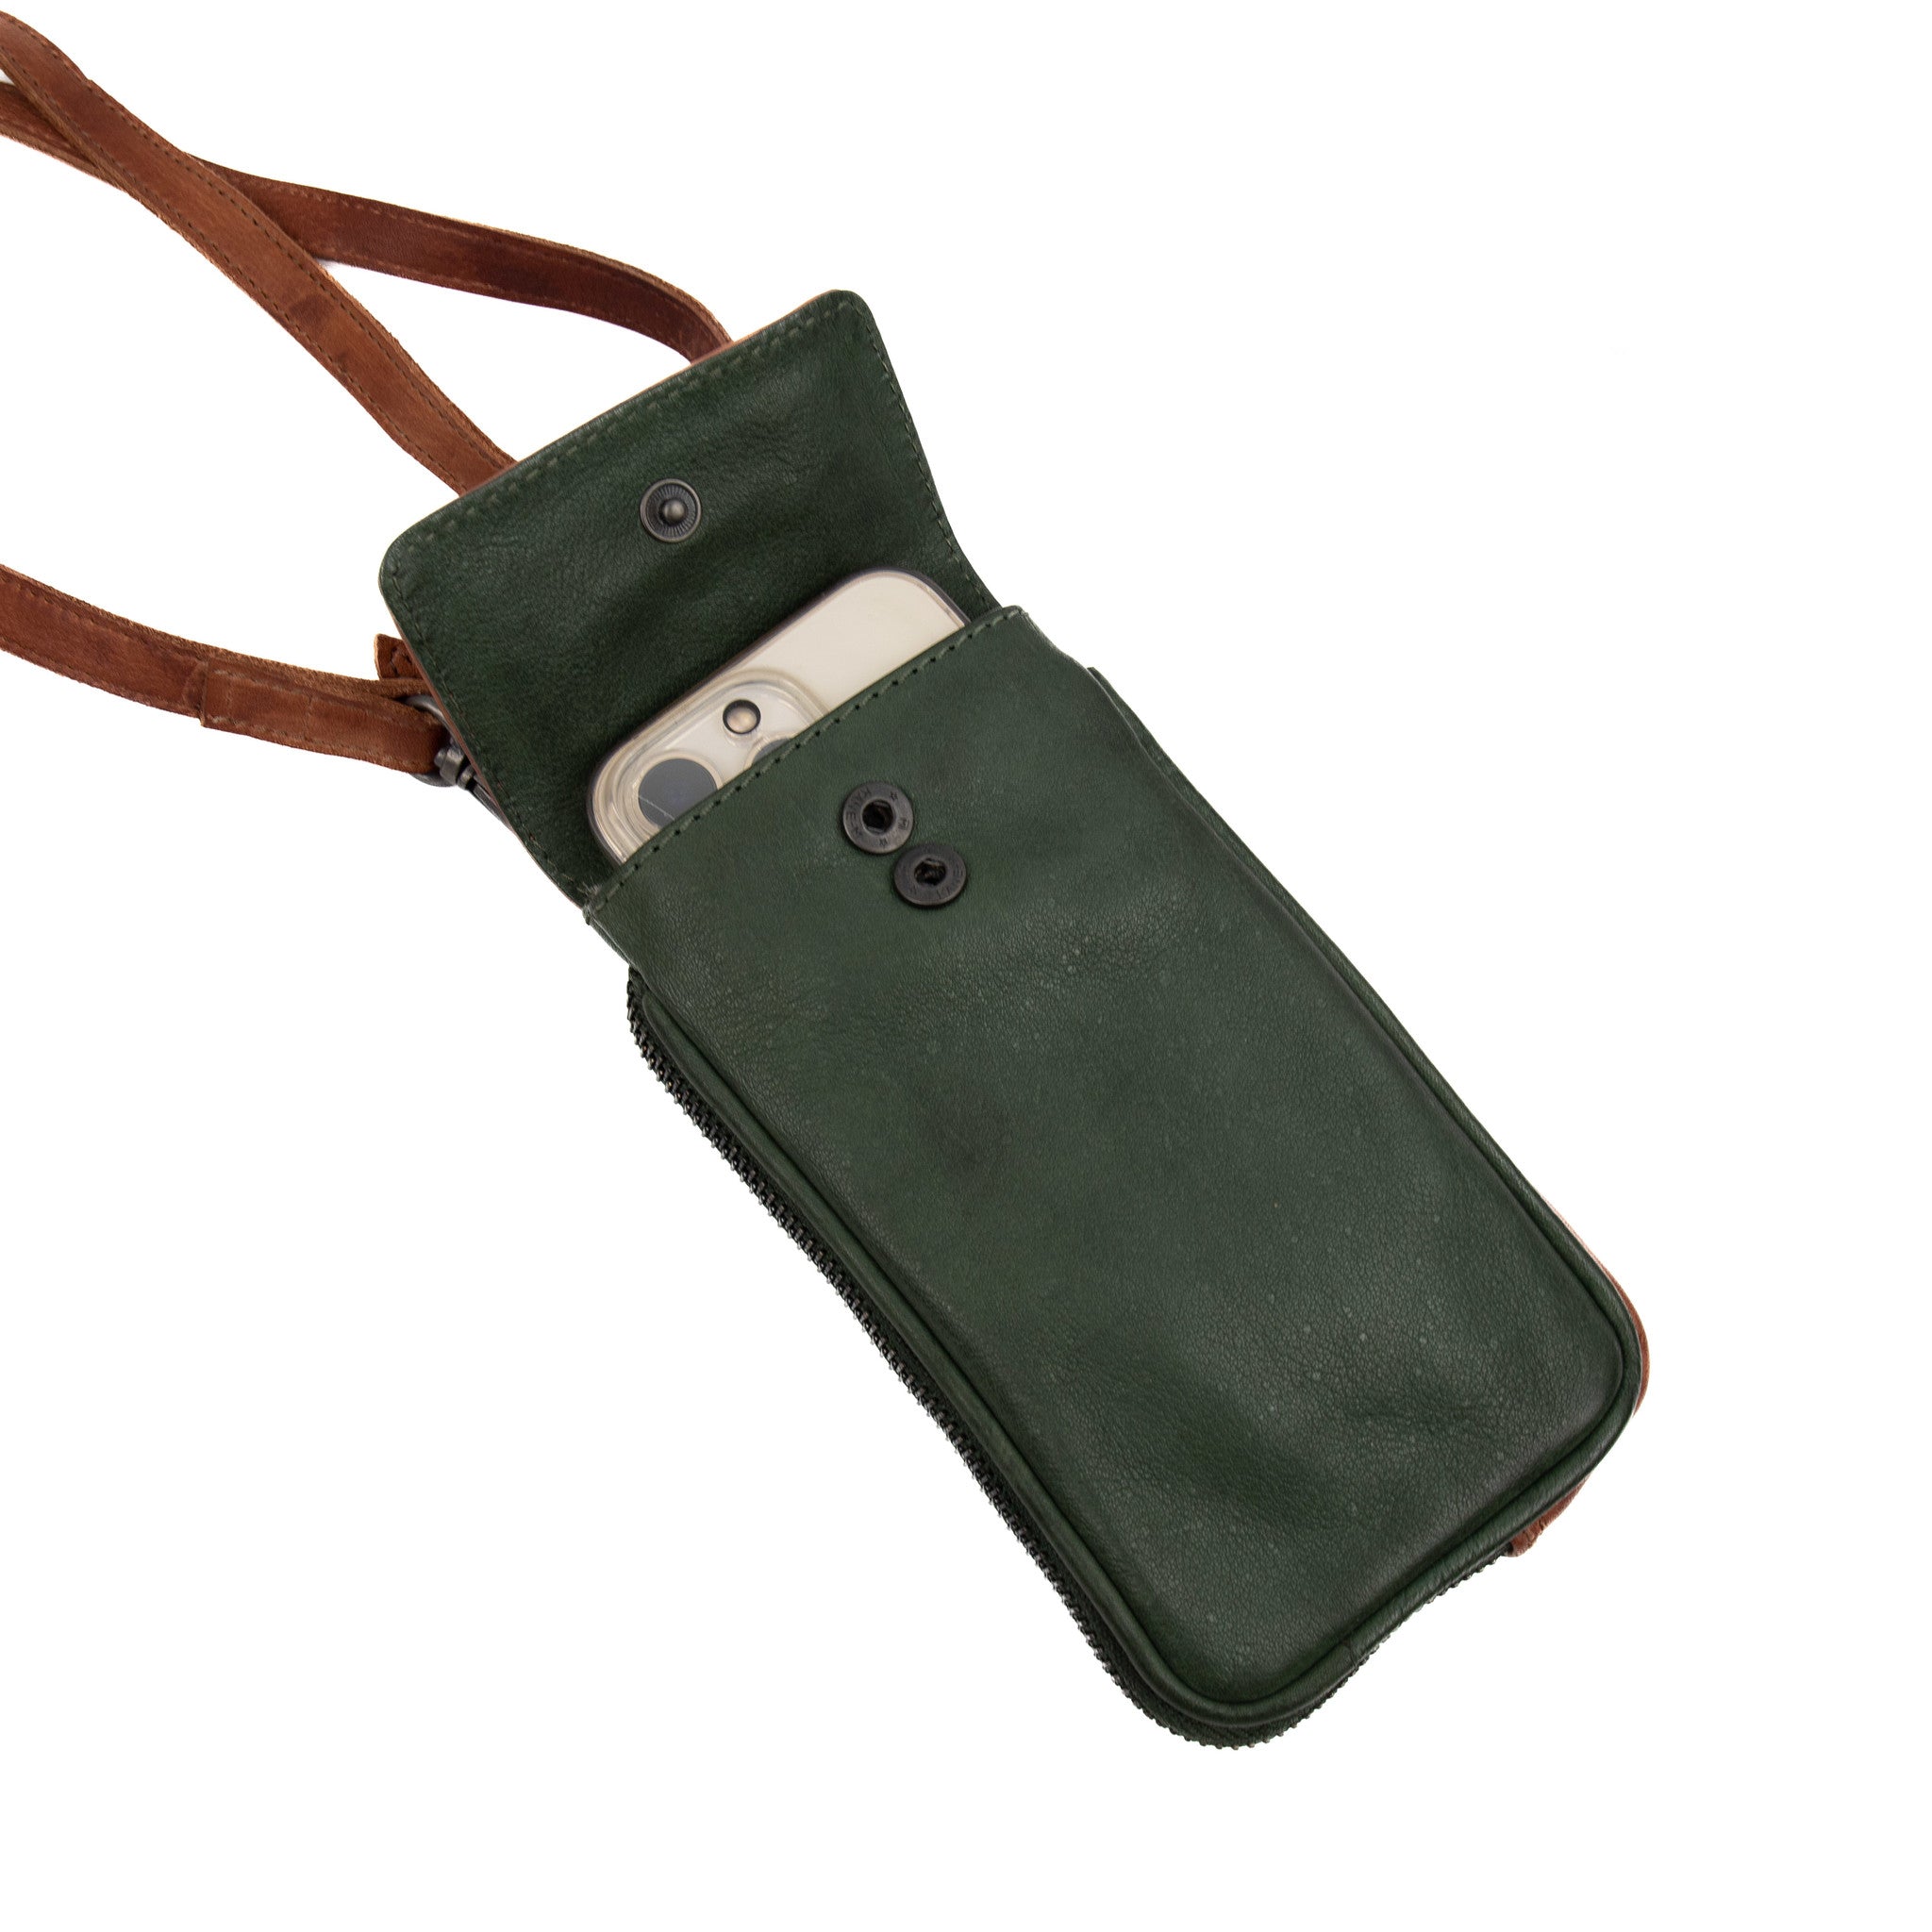 Phone bag 'Ahana' green/cognac - CP 2106